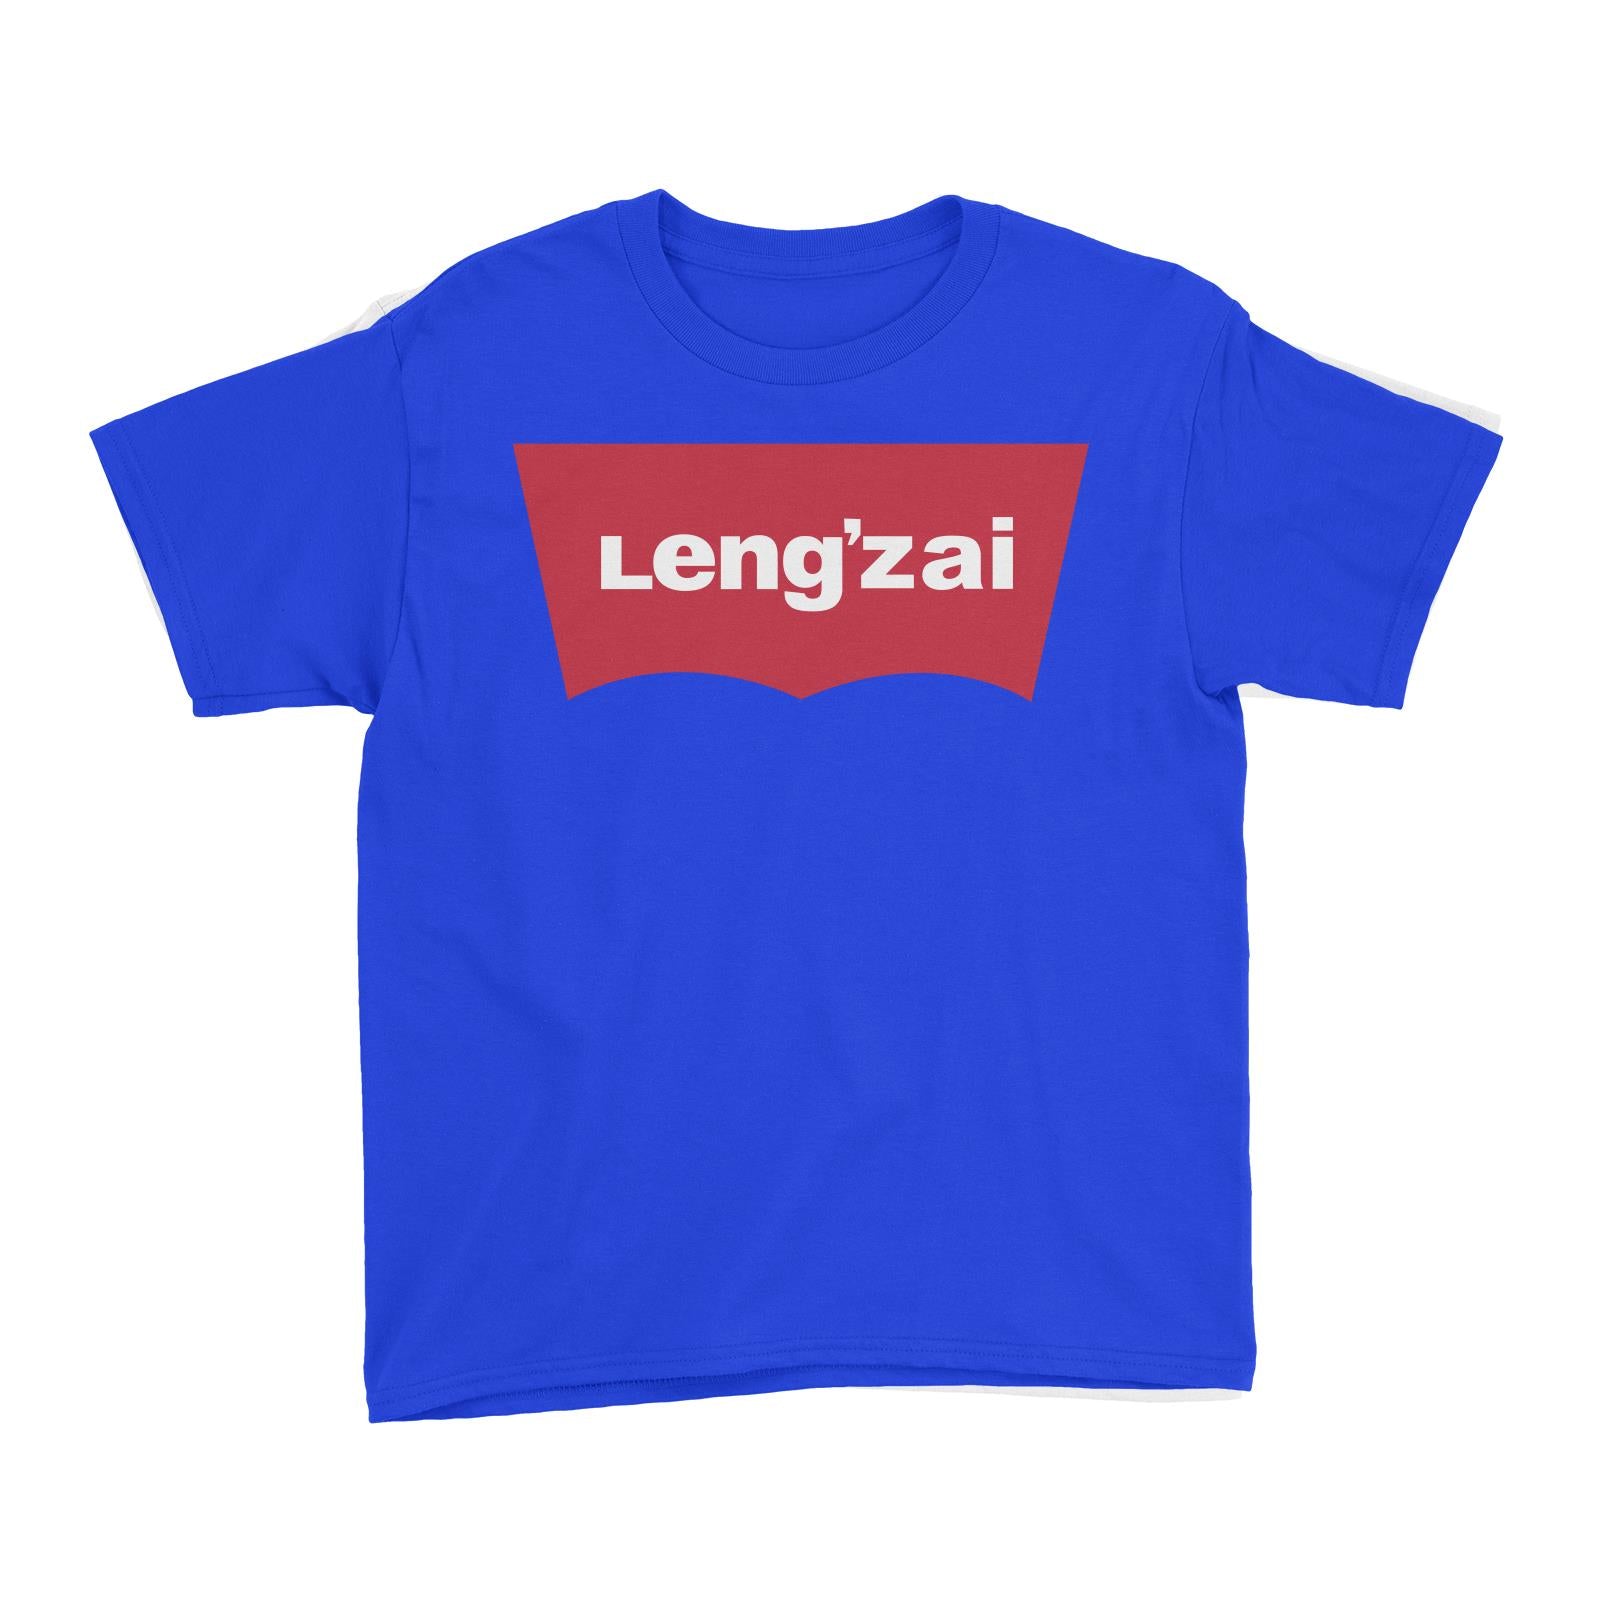 Slang Statement Lengzai Kid's T-Shirt